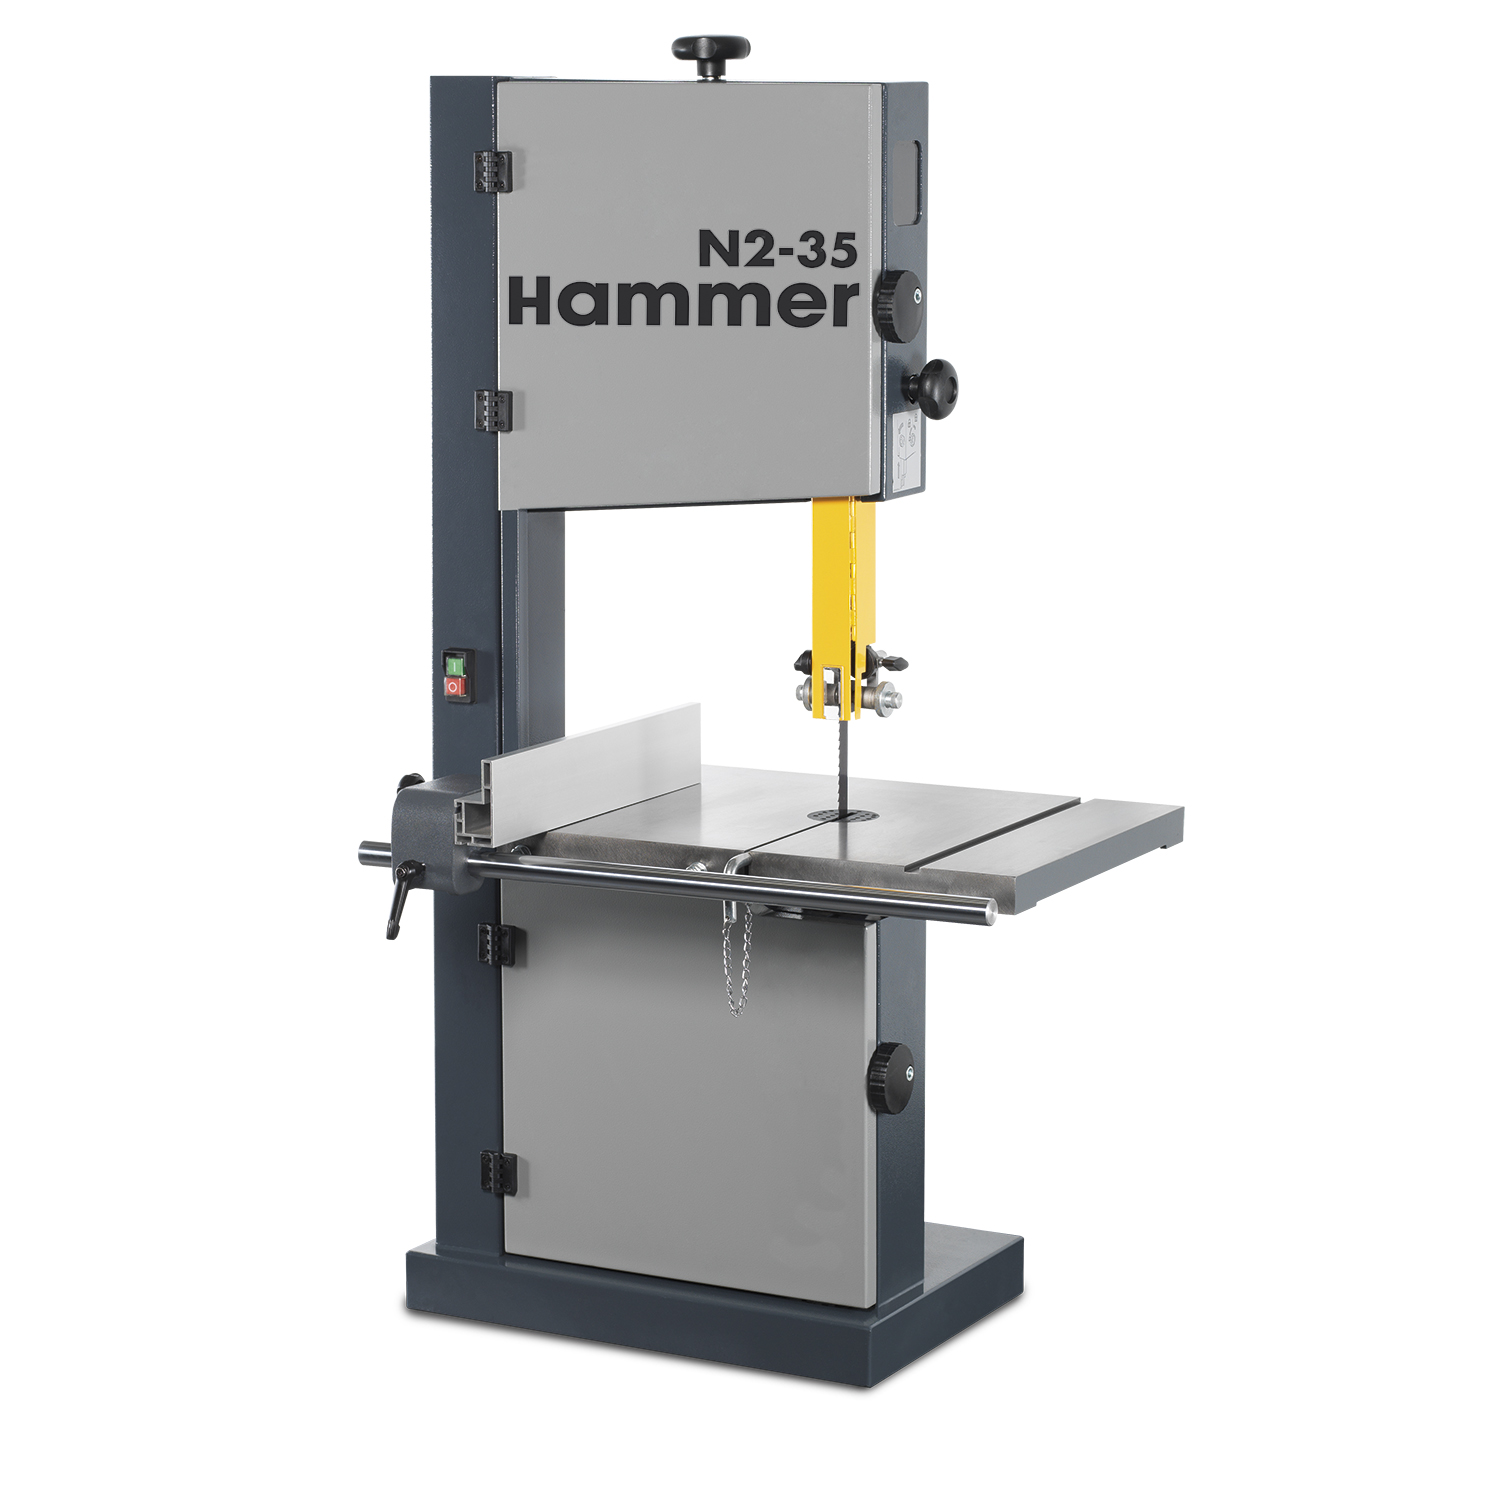 Sierra de cinta Hammer N2-35 1 x 230 V, 50 Hz